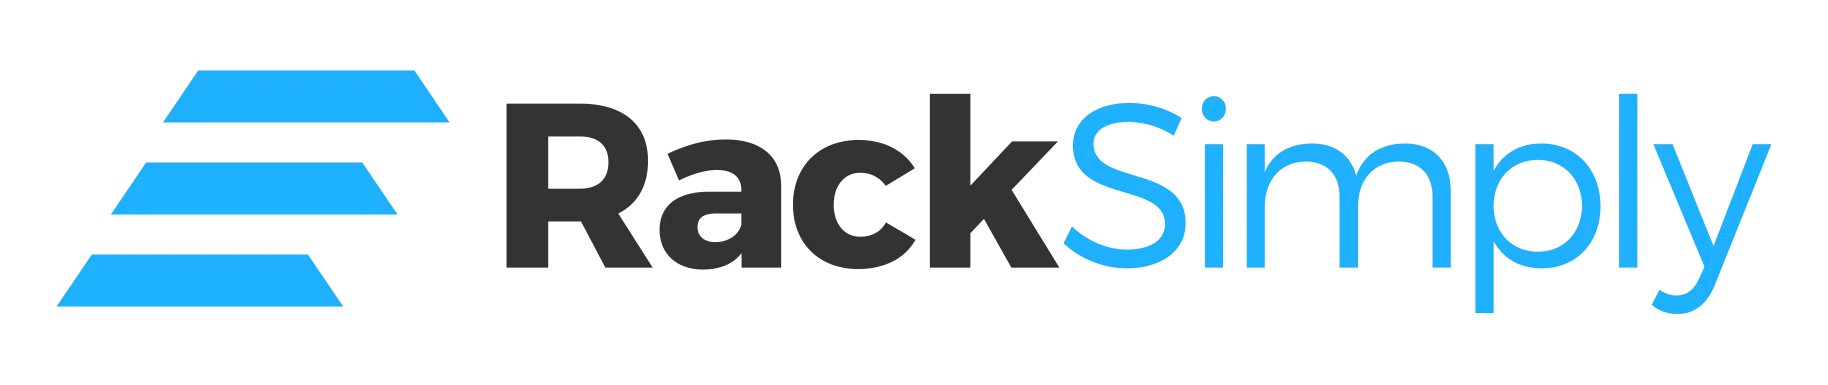 Racksimply Logo